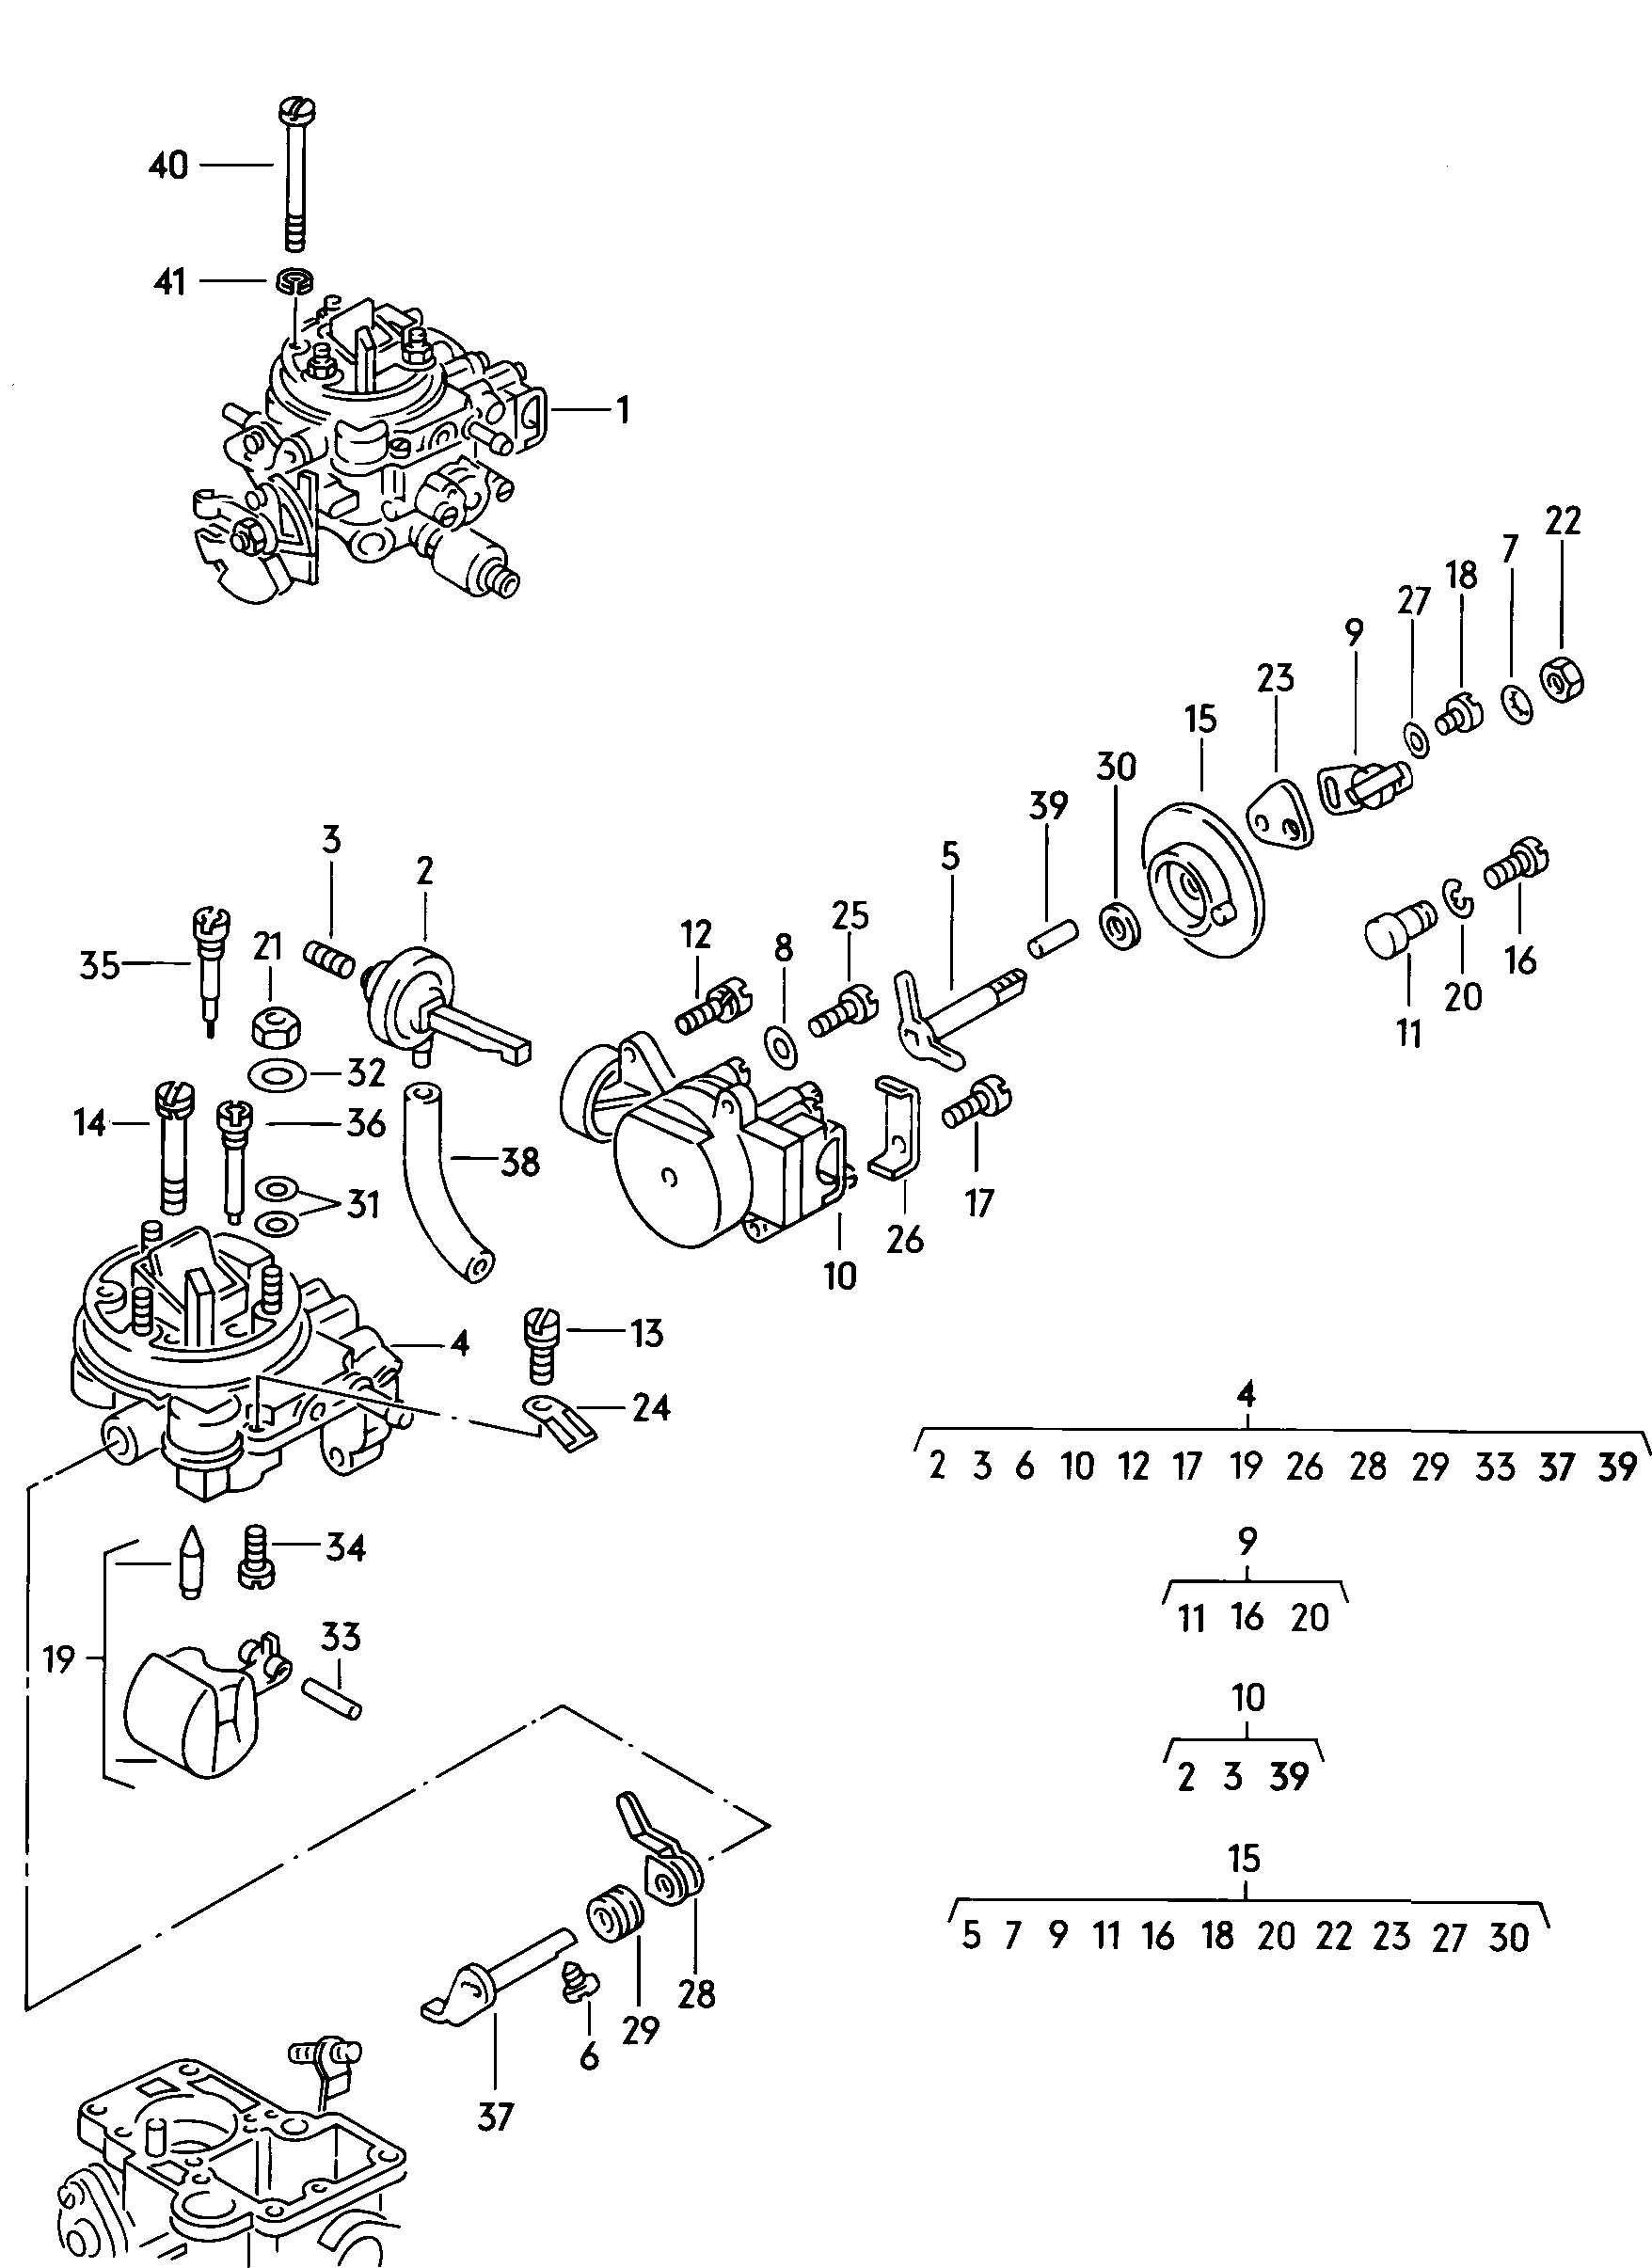 korpus gażnika-część górna - Mod.181 / Iltis(ILT)  